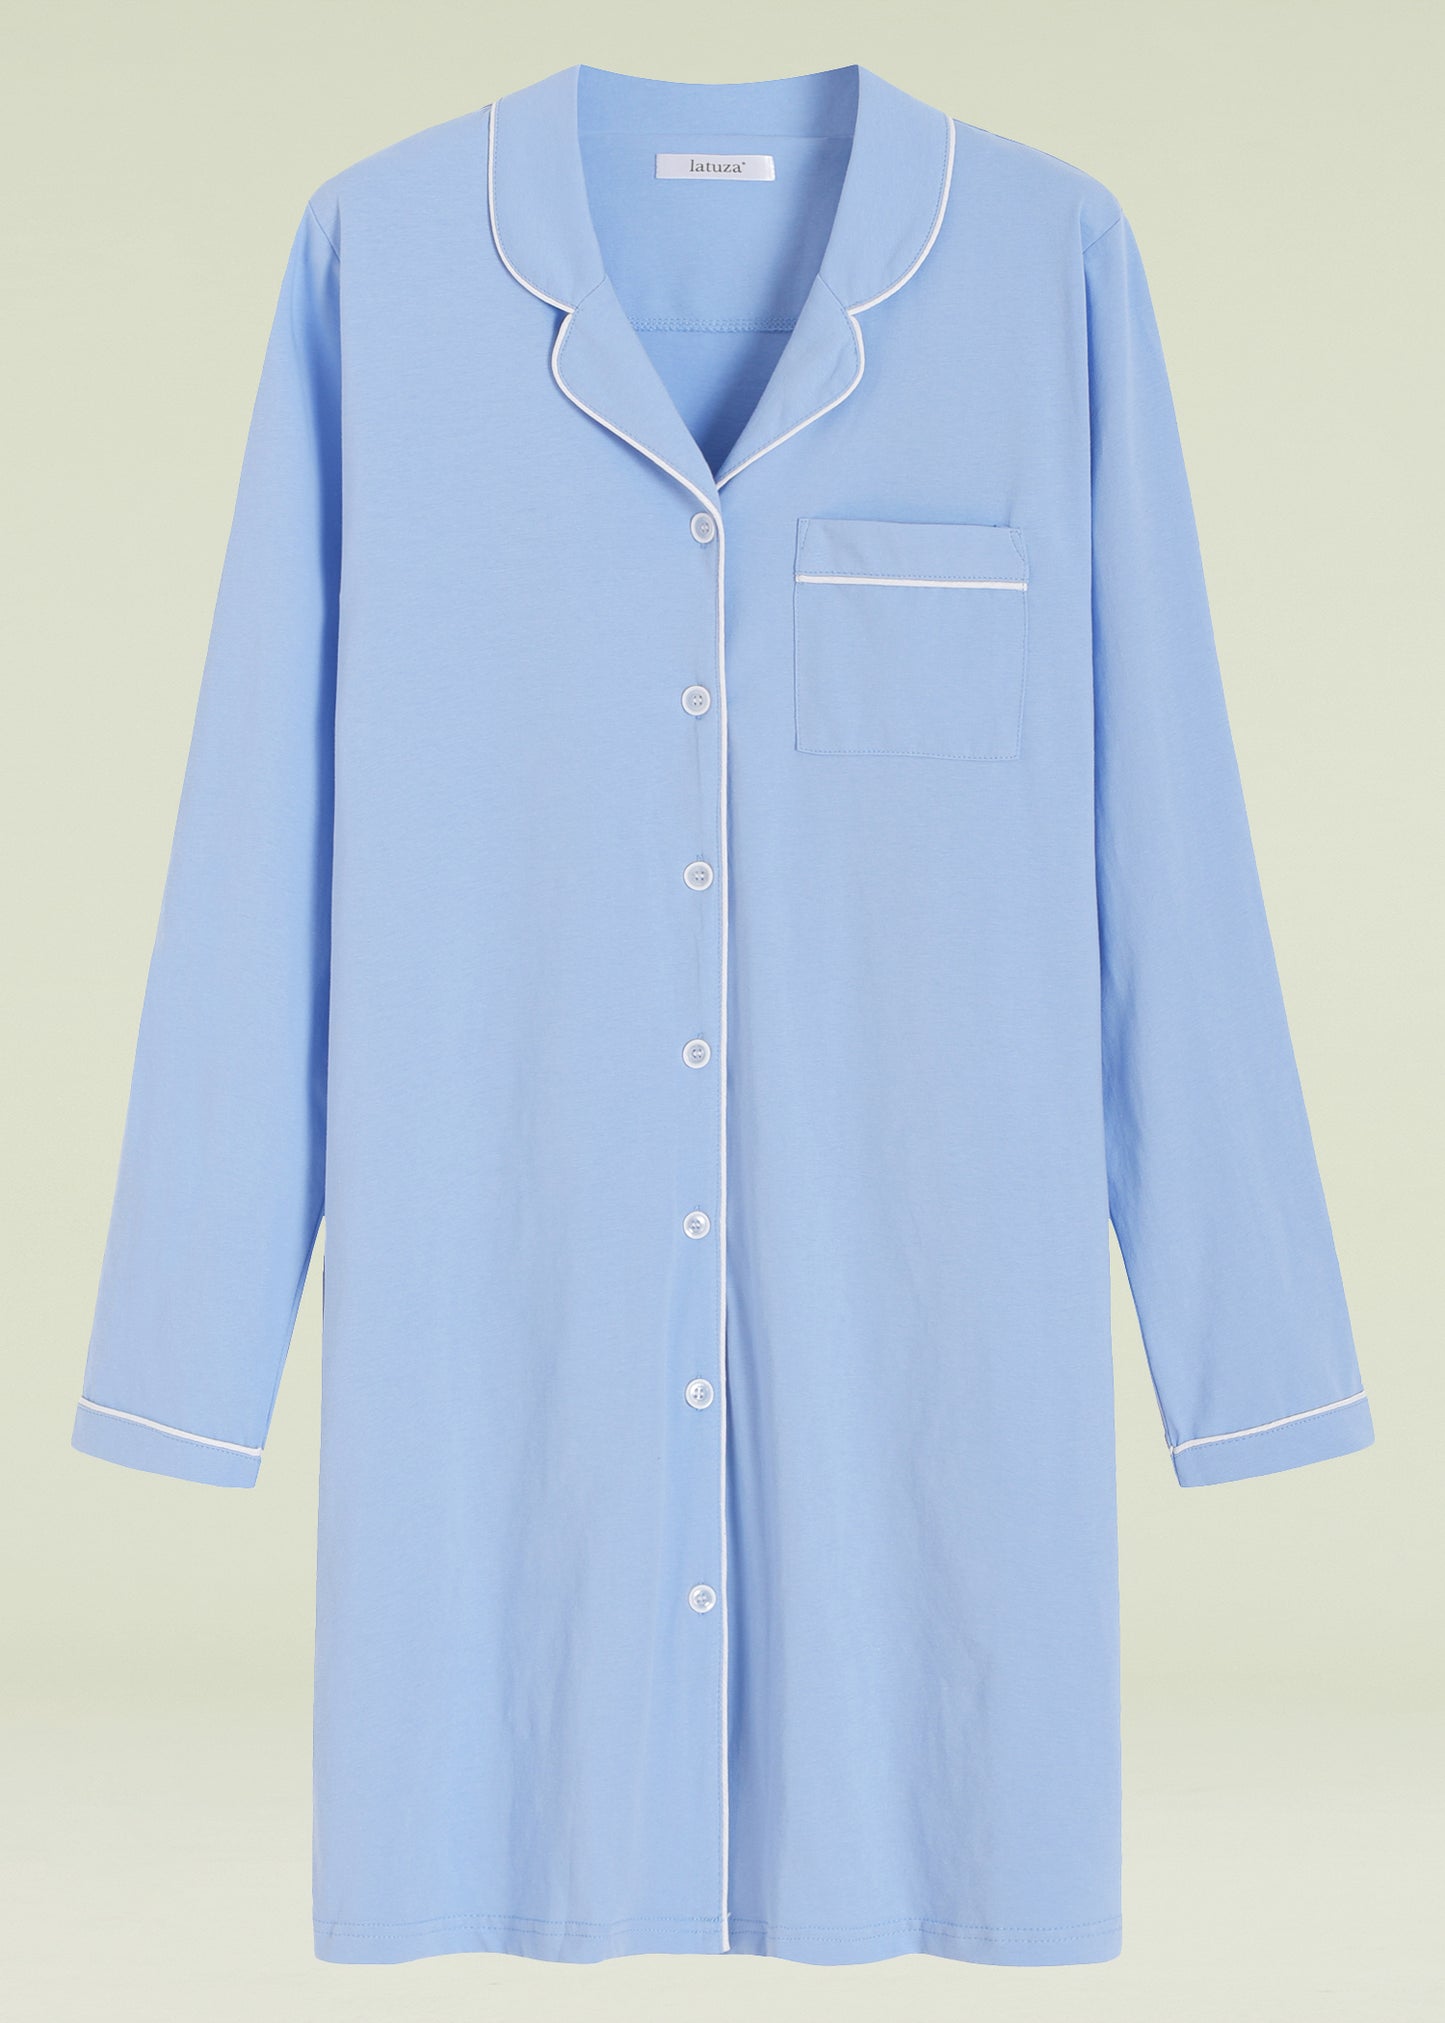 ROYAL Blue Boyfriend Shirt, Sleep Shirt Women, Cotton Nightwear